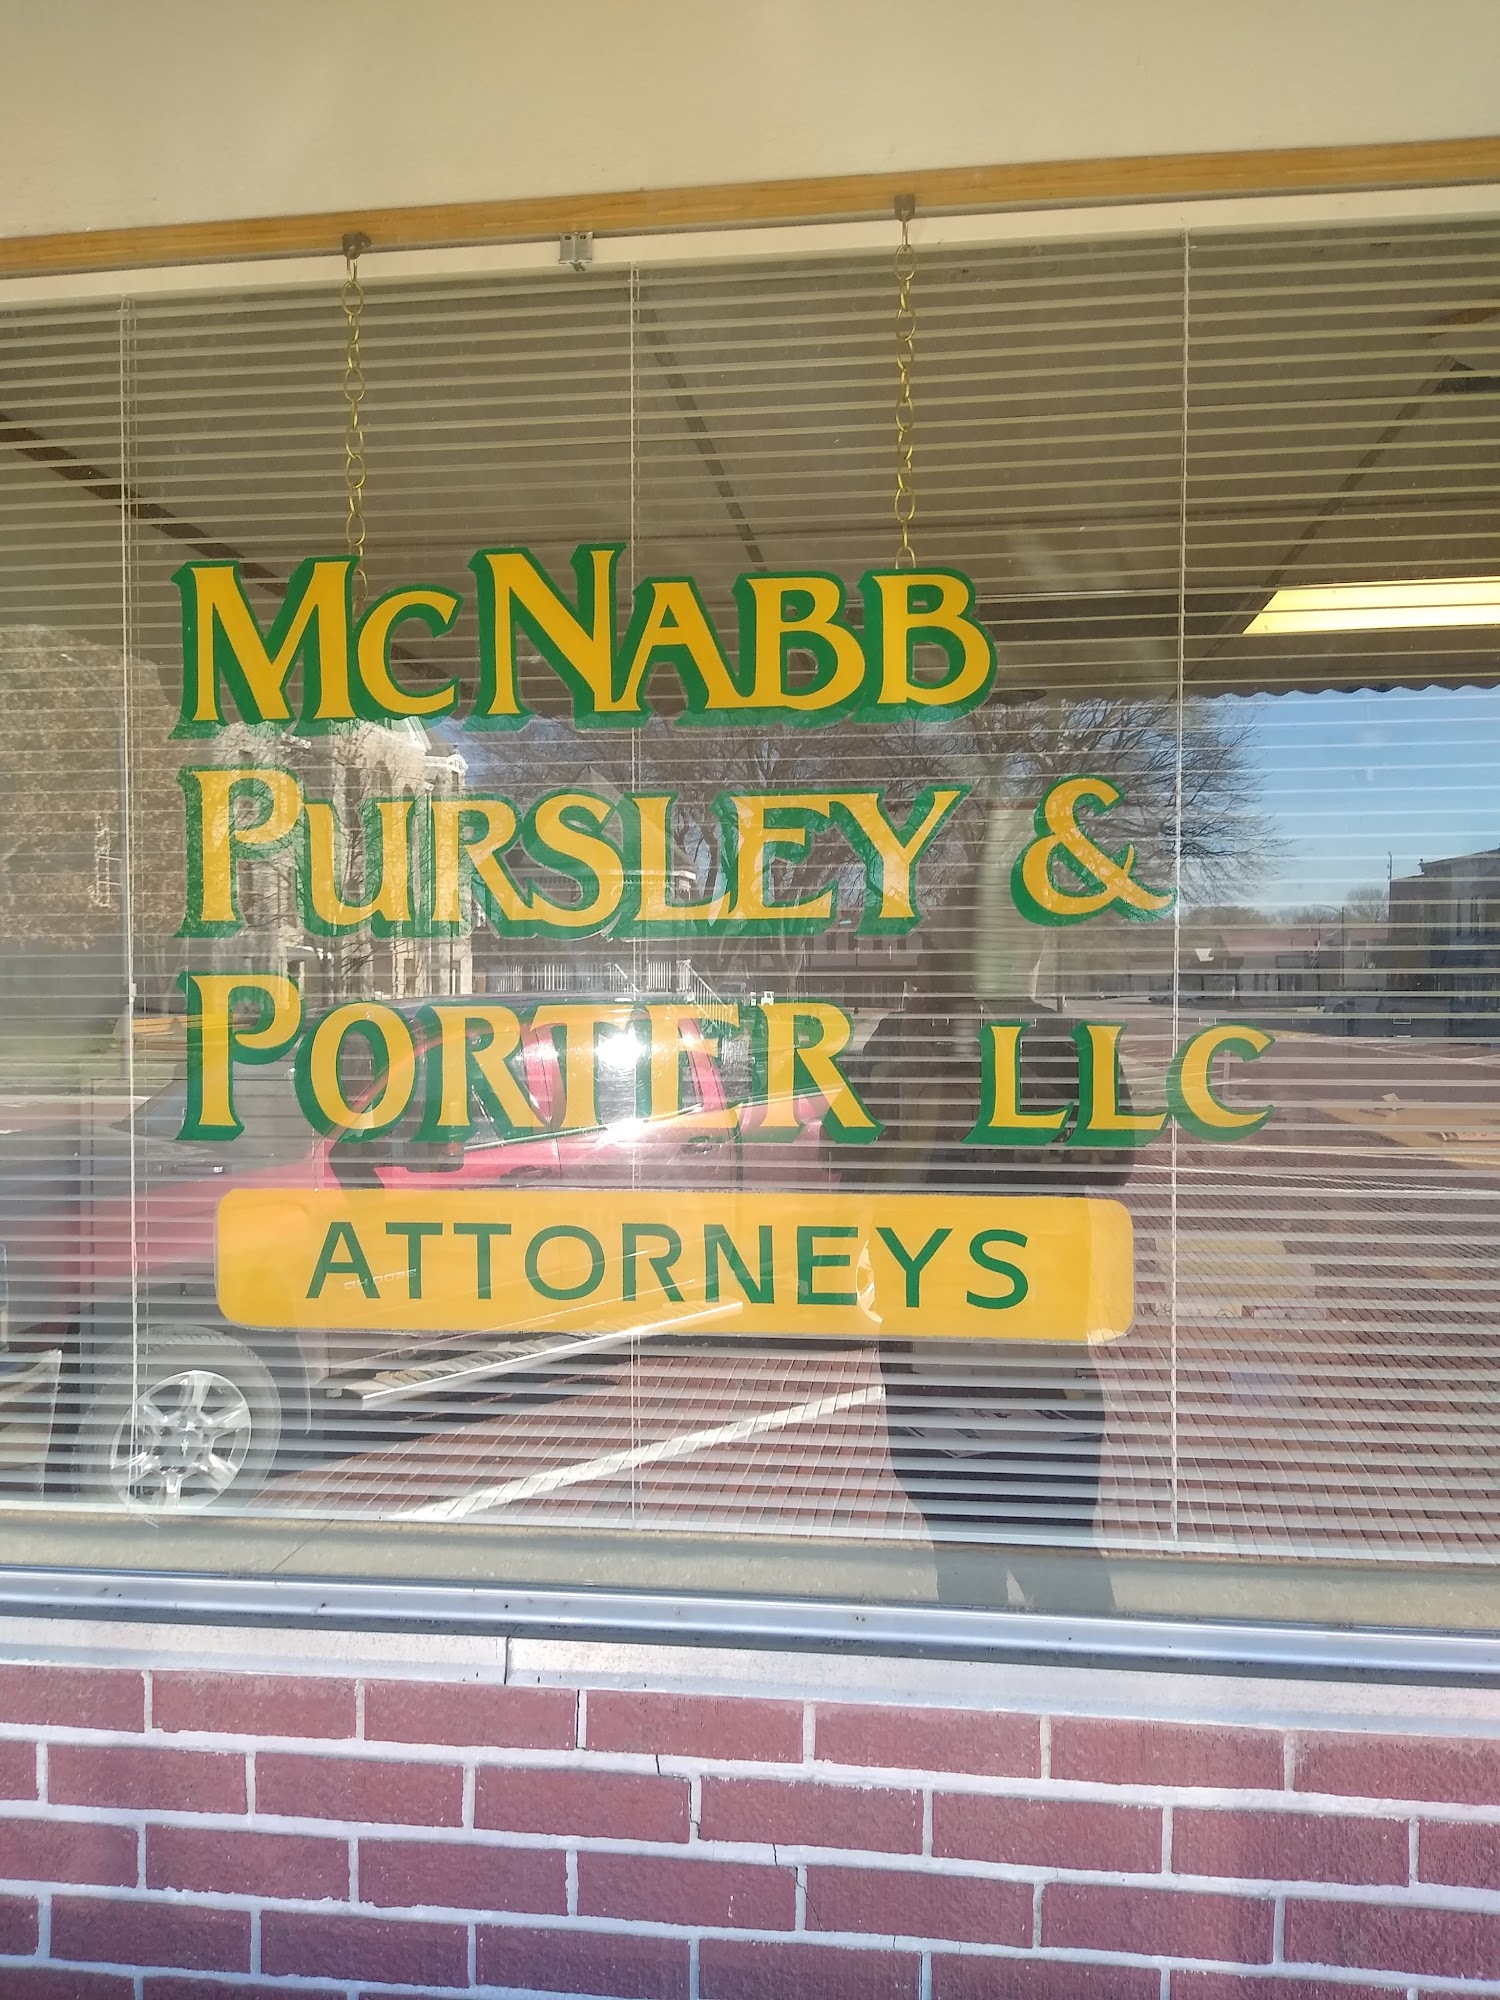 Mc Nabb Pursley & Porter, LLC 1 N Main St, Butler Missouri 64730